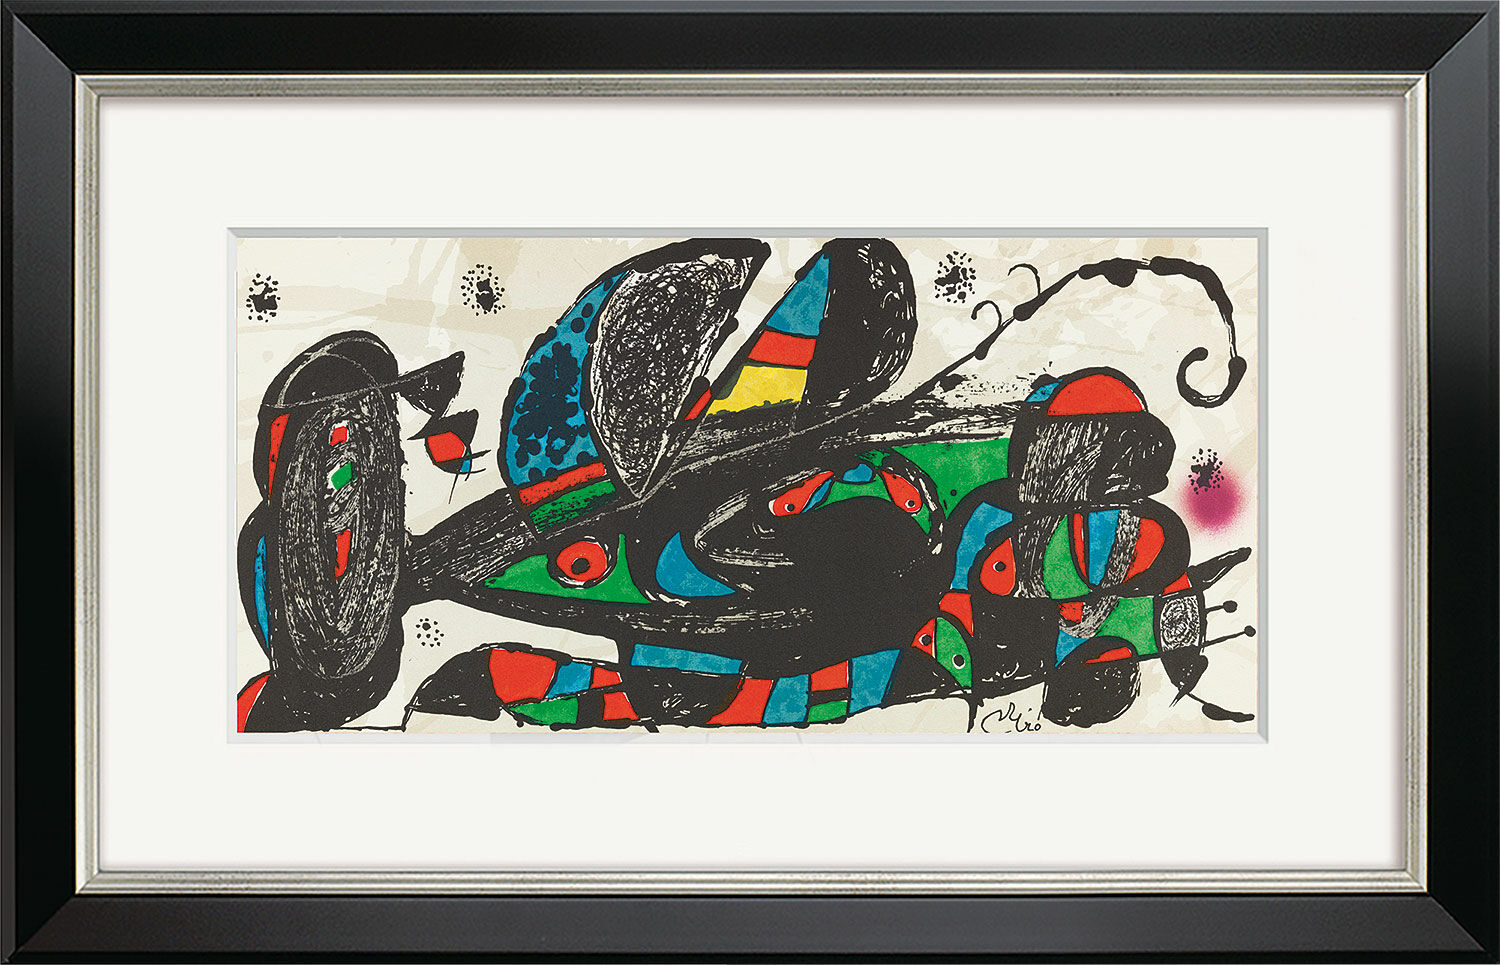 Beeld "Escultor Iran" (1974), ingelijst von Joan Miró